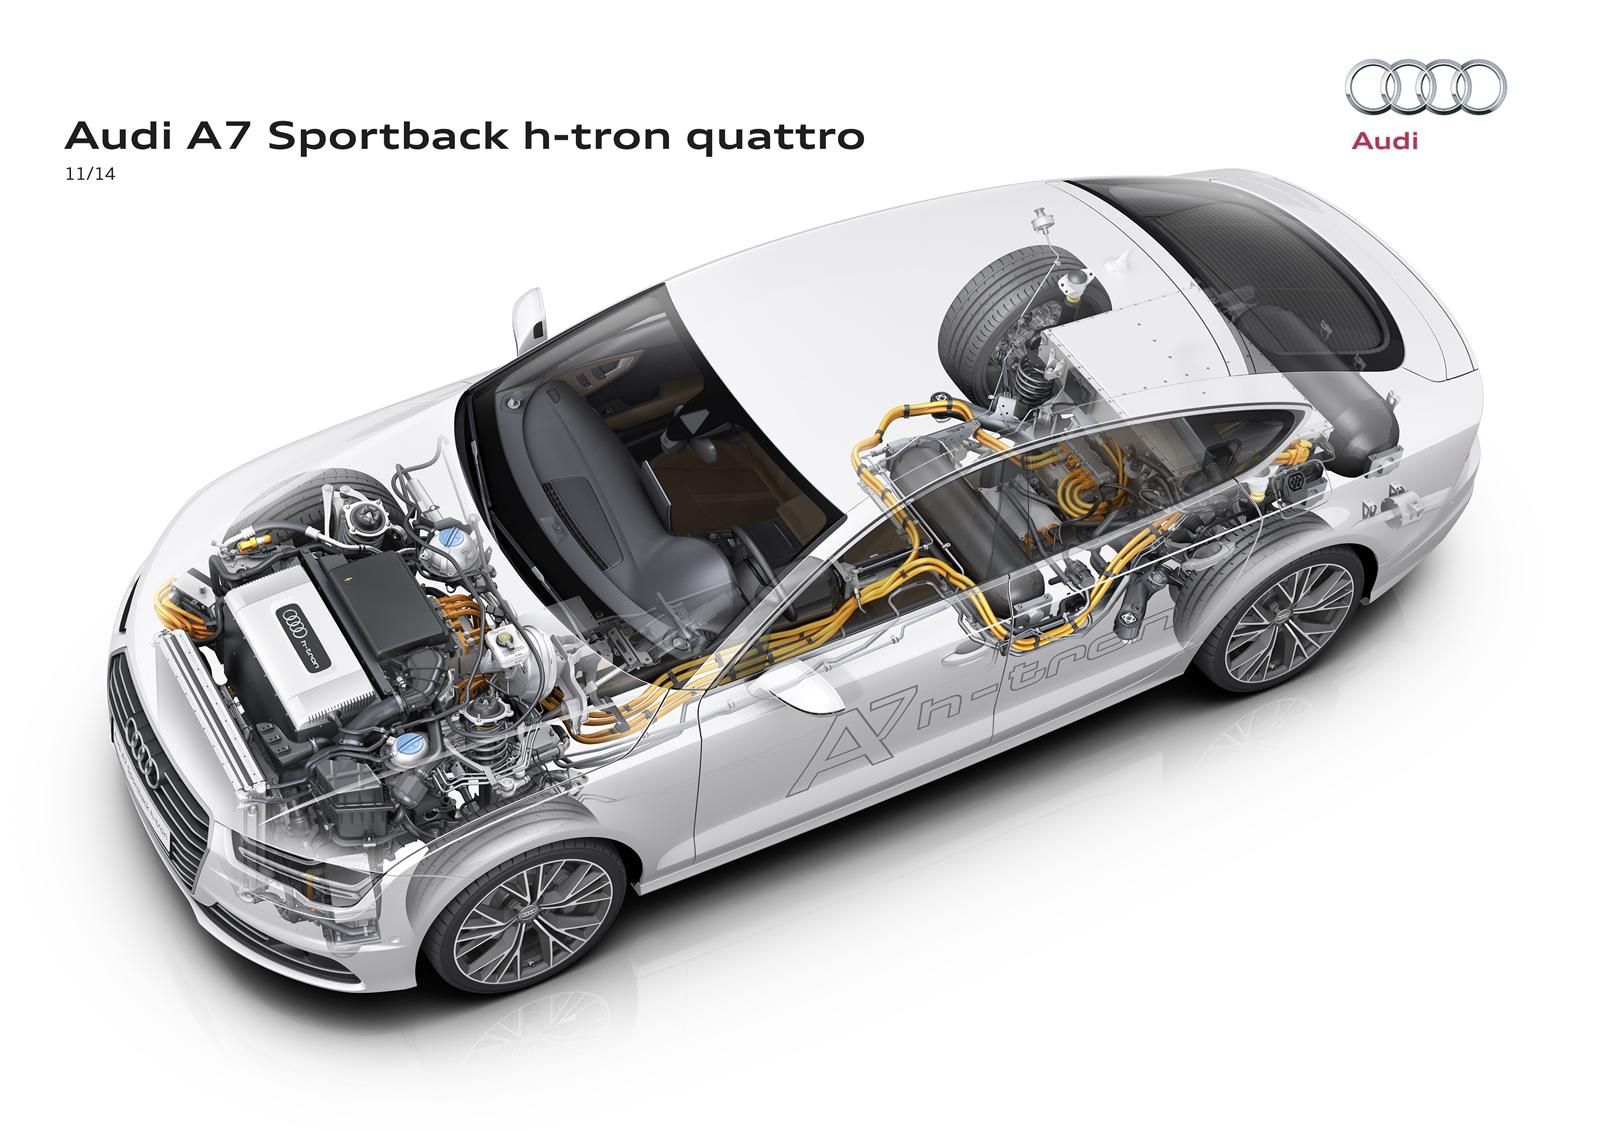 Audi A7 Sportback h-tron quattro resim galerisi